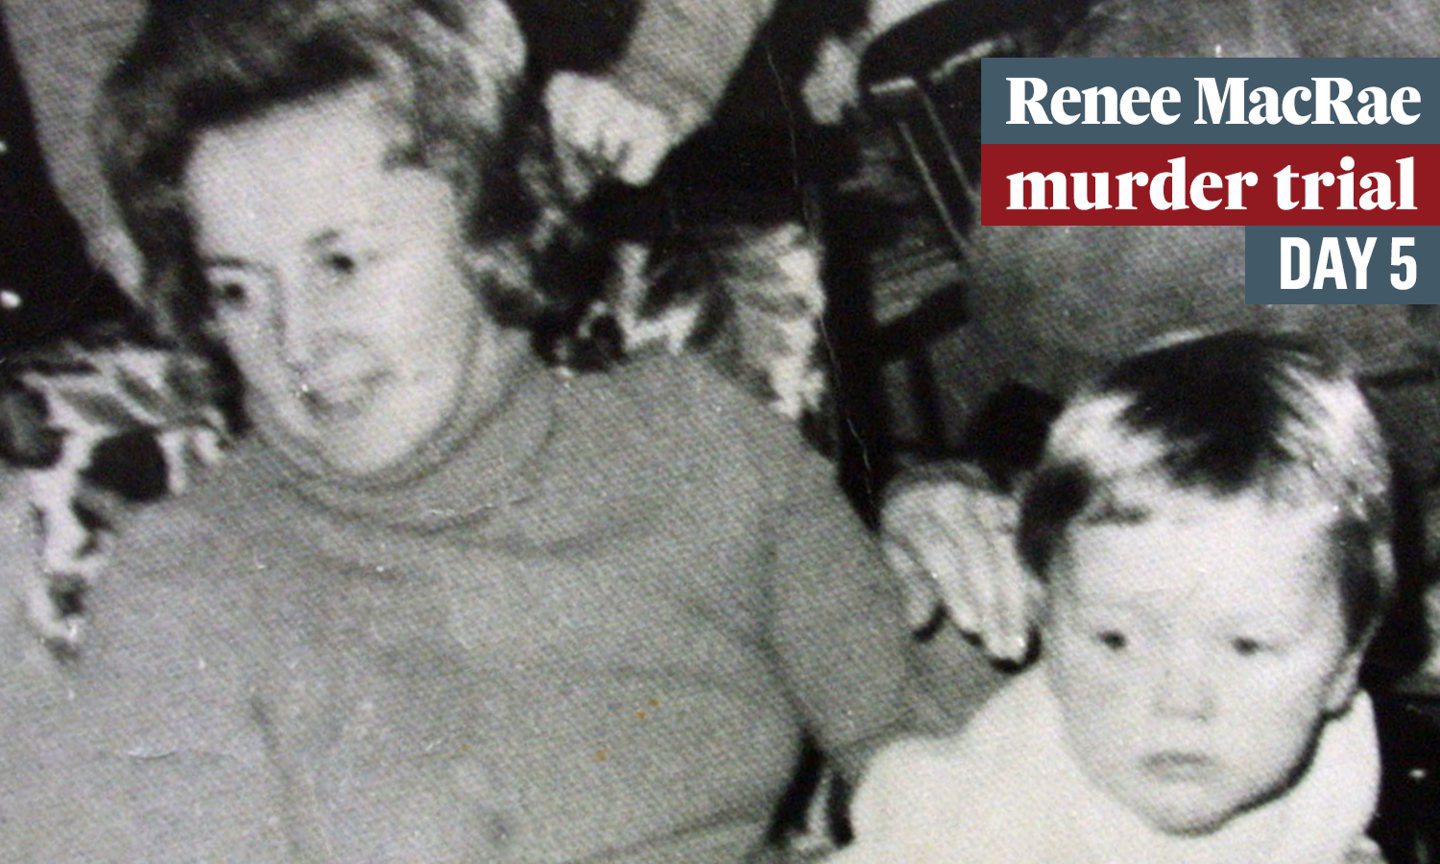 Wife of Renee MacRae murder accused told police: 'I never stabbed her'